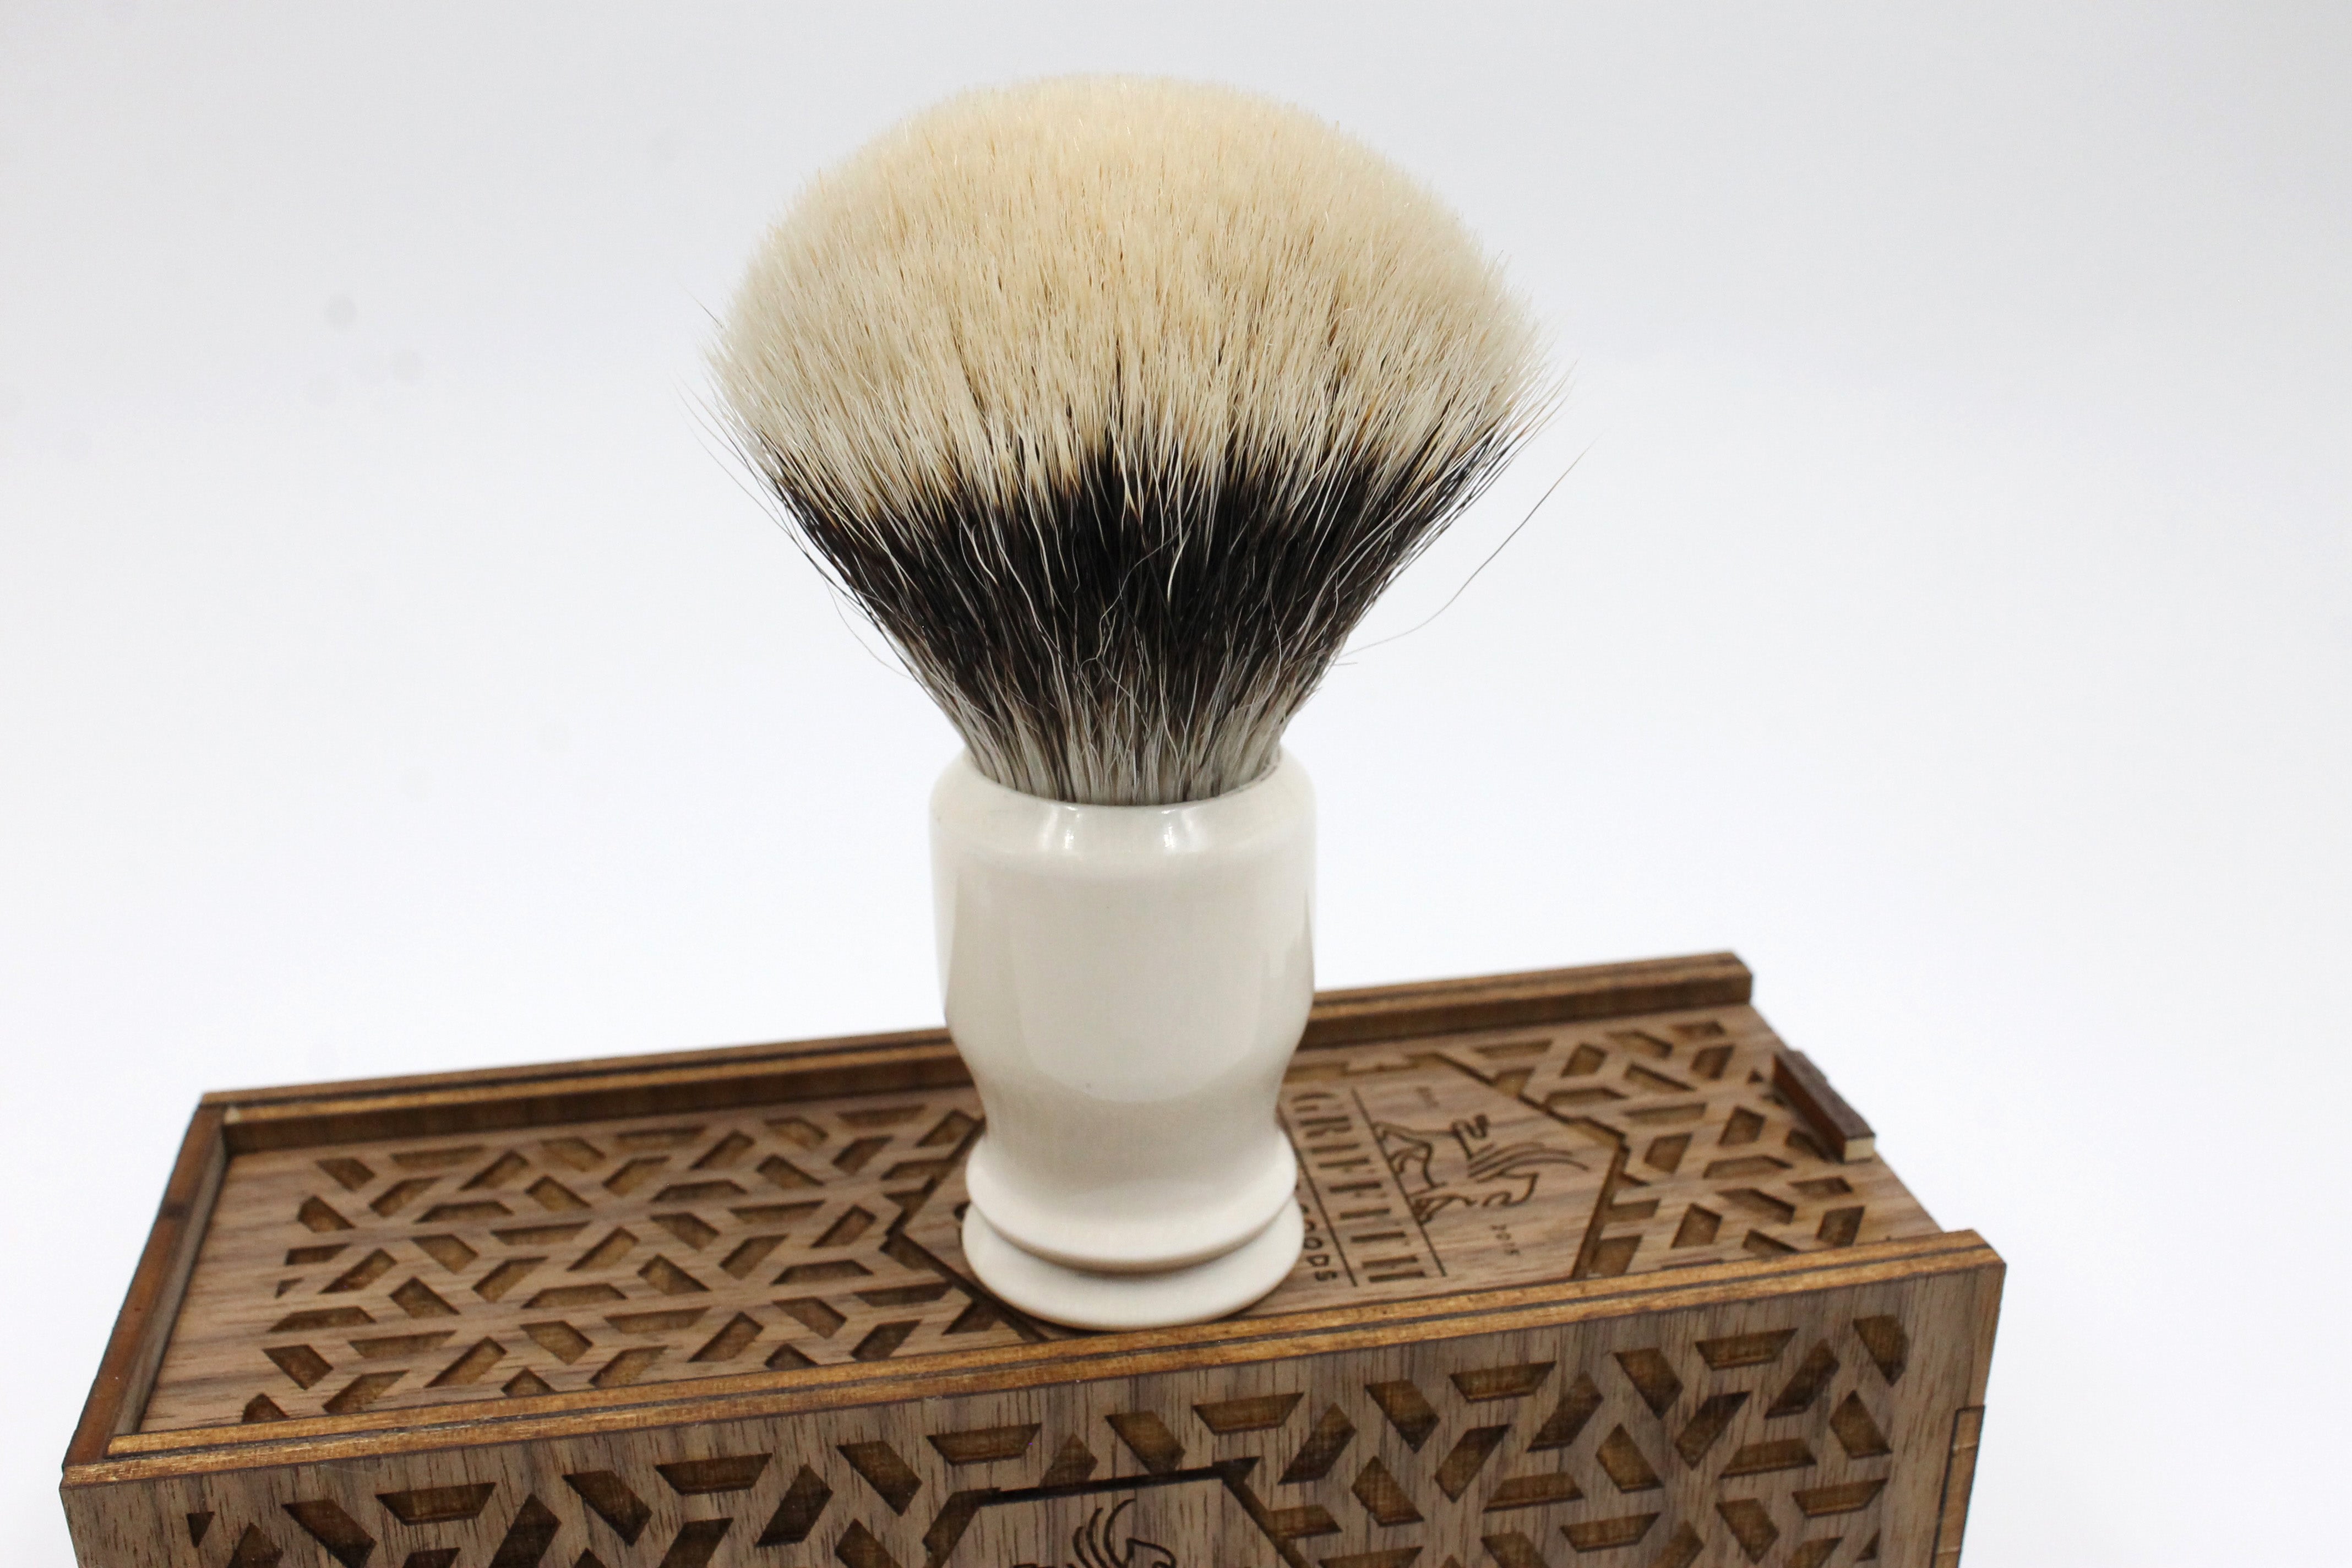 Griffith Shaving Goods Artist Series Shaving Brush #62 - Lathe Turned Mammoth Ivory Handle with 26mm Manchurian Badger Hair